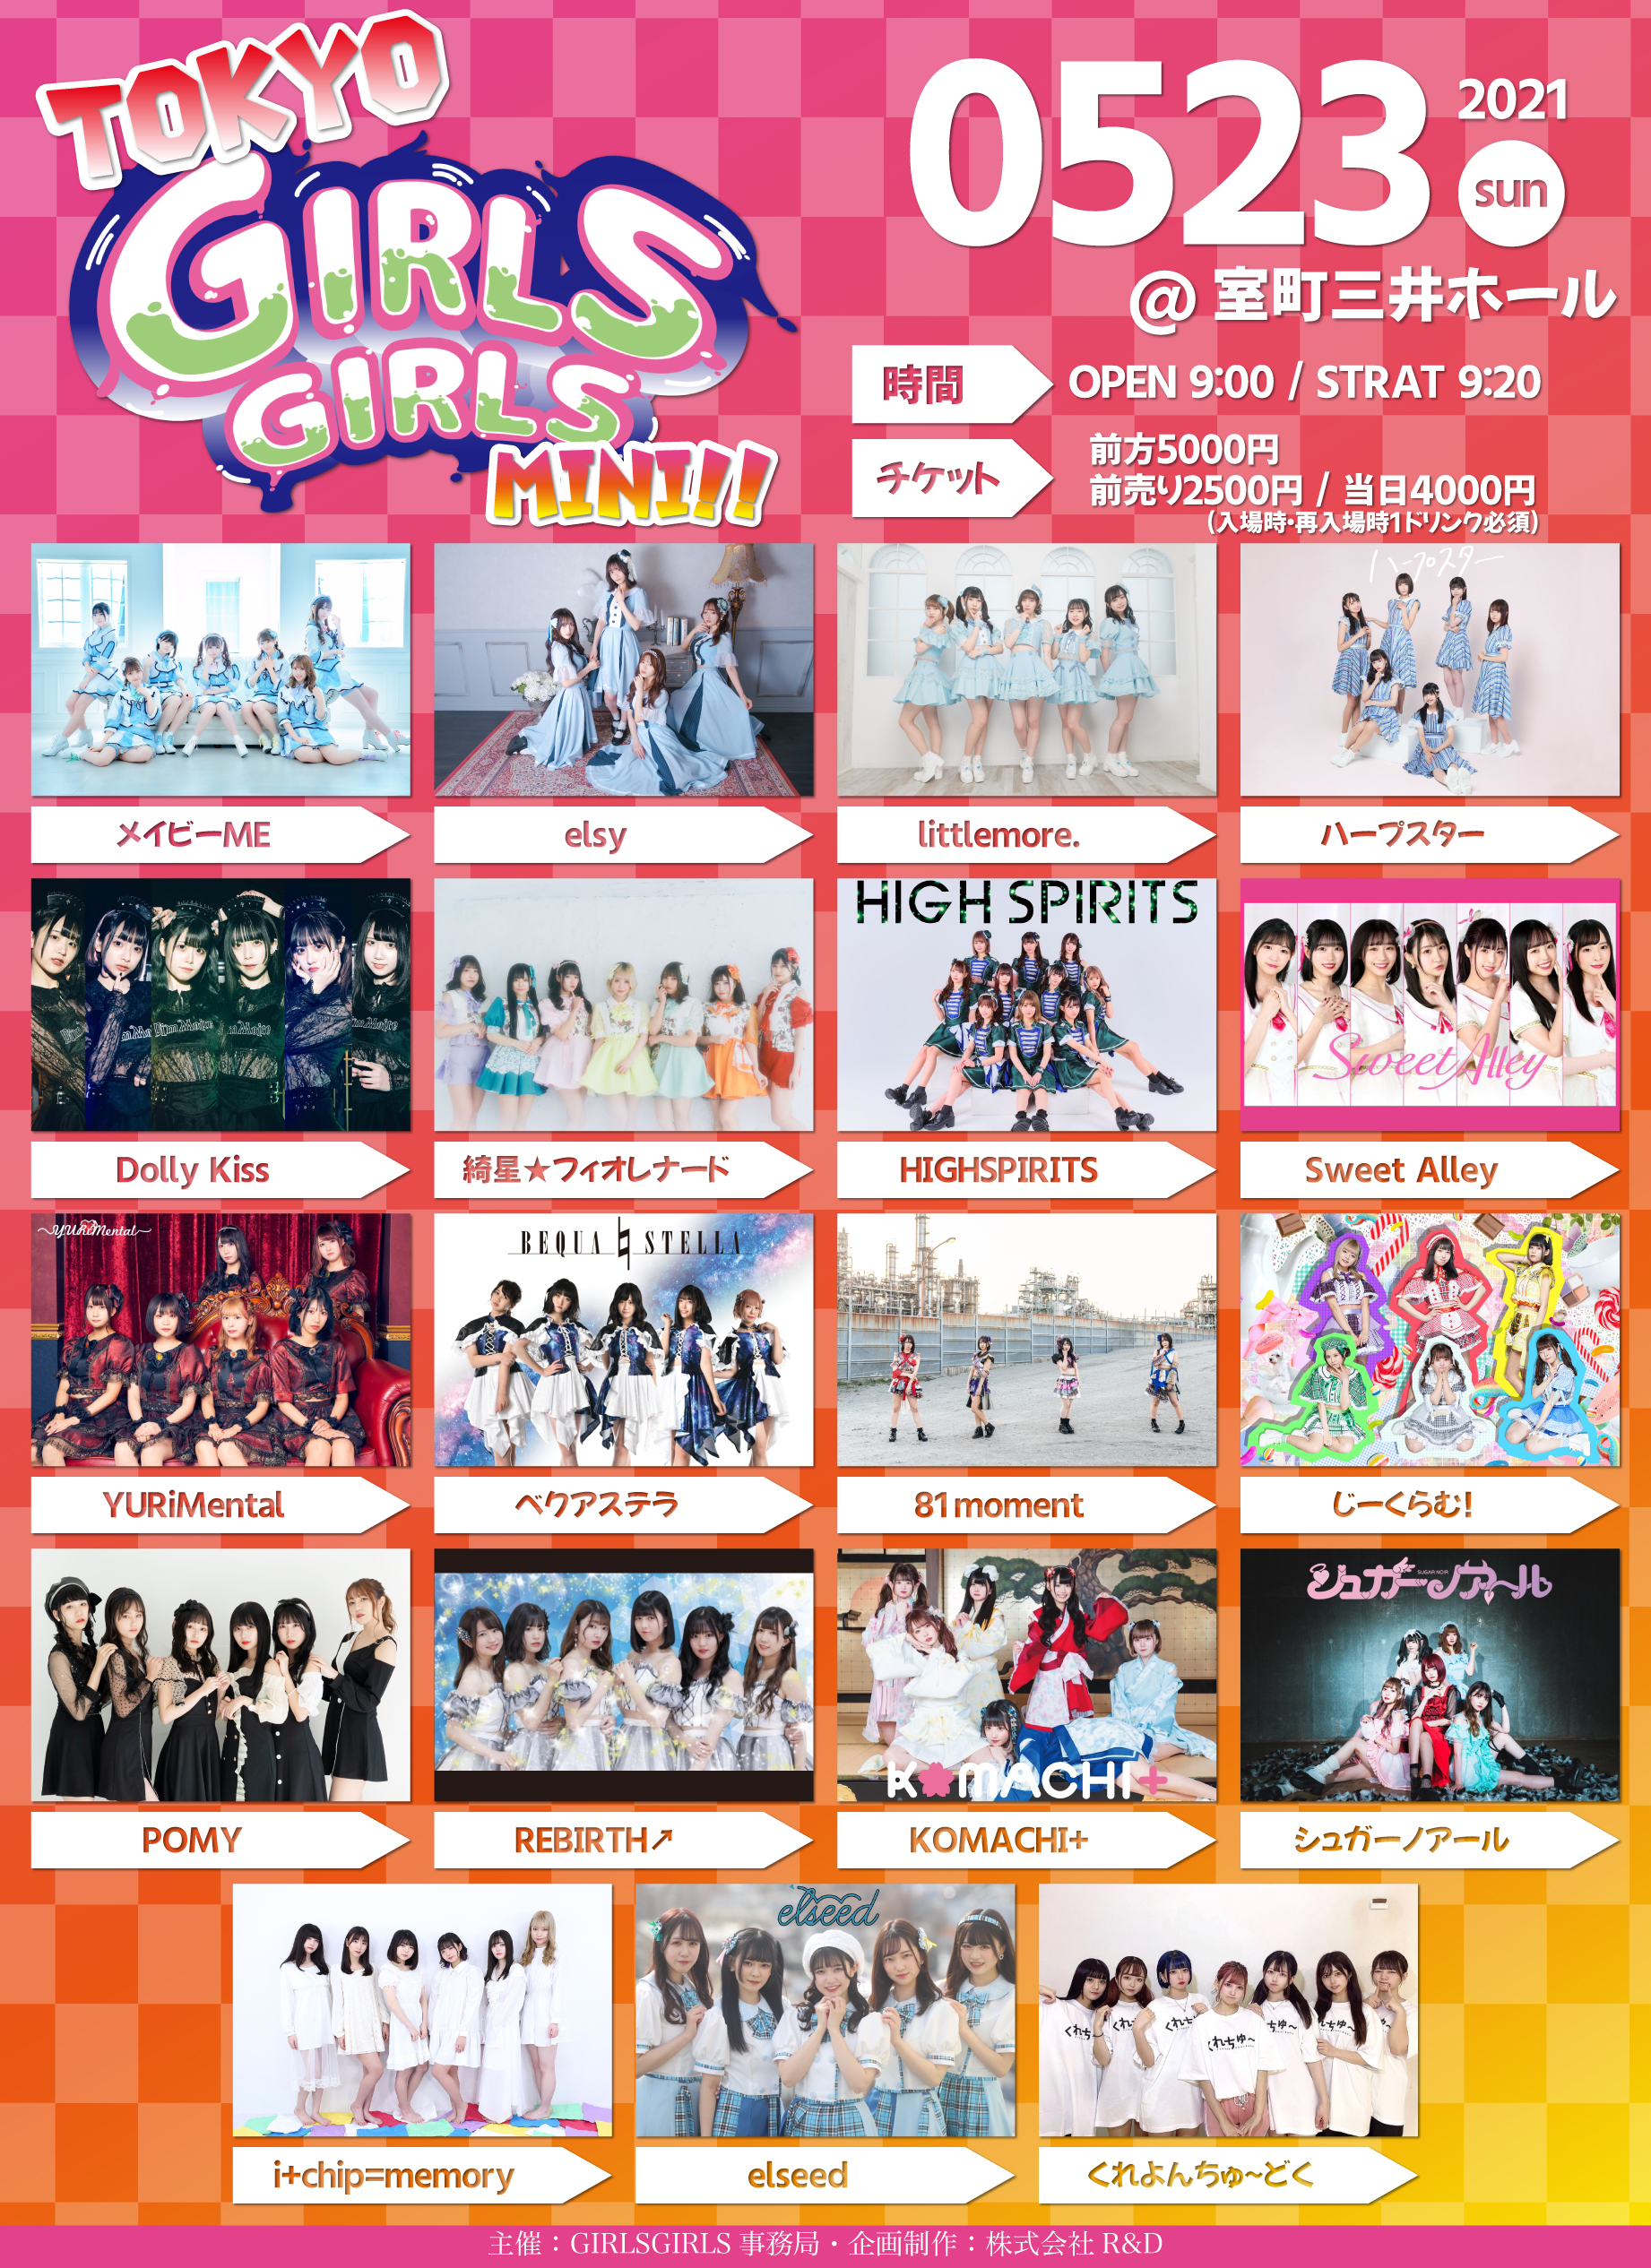 5/23(日) TOKYO GIRLS GIRLS mini!!